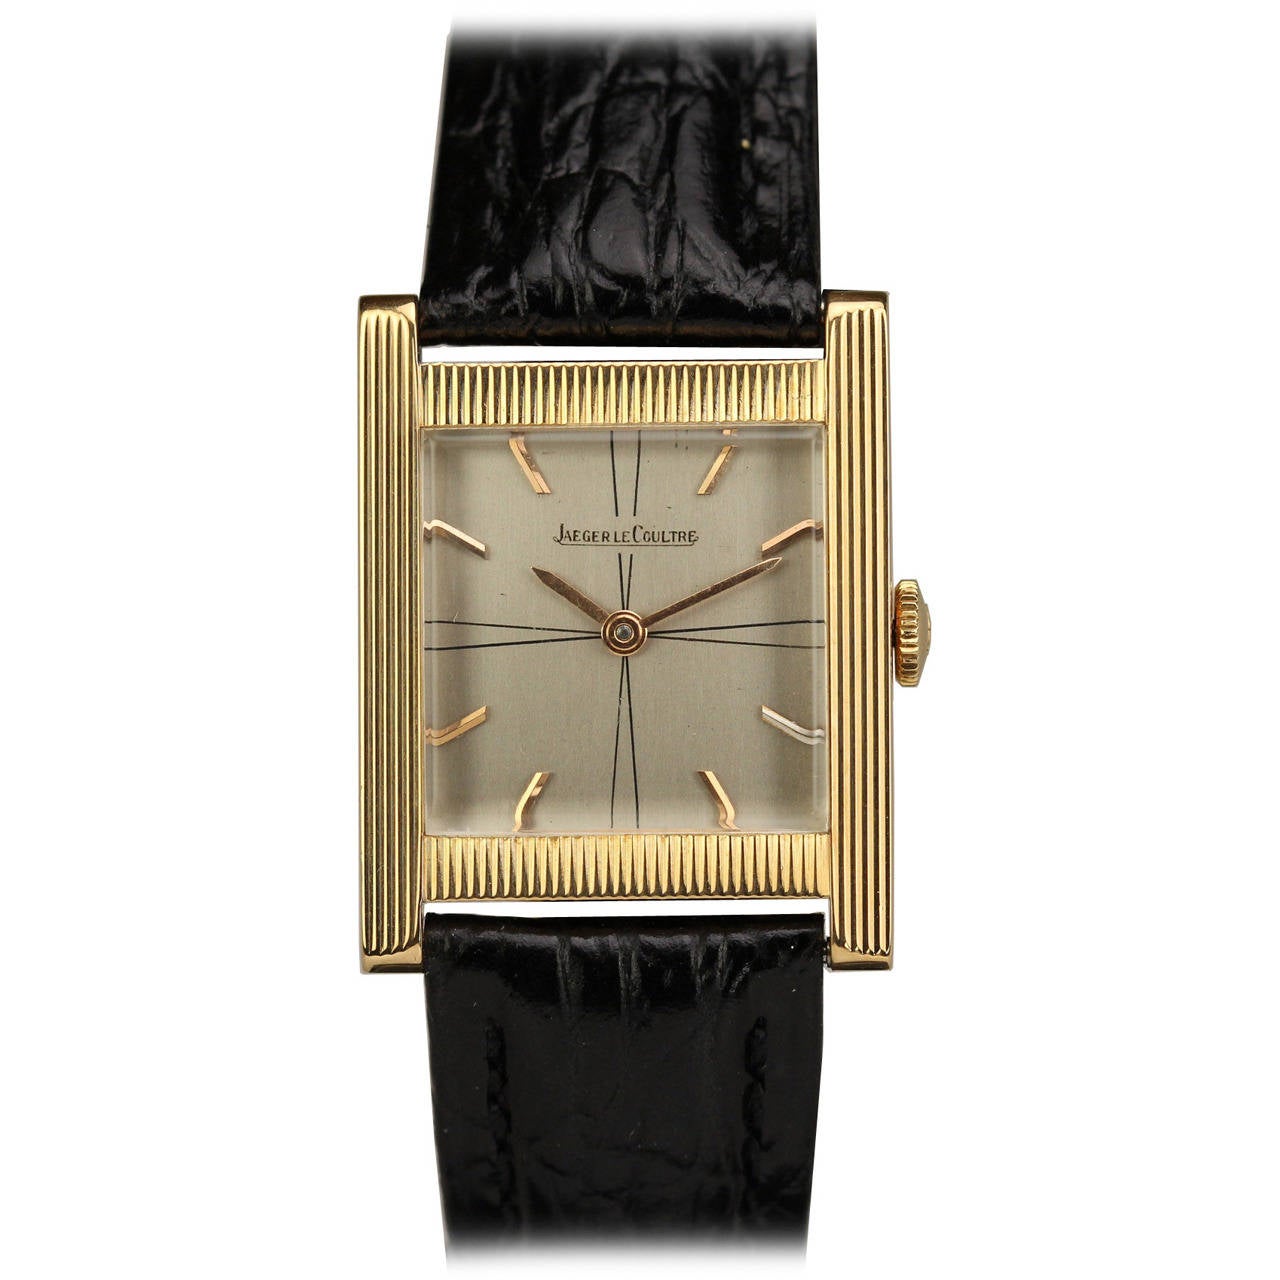 Jaeger LeCoultre Yellow Gold Dress Wristwatch